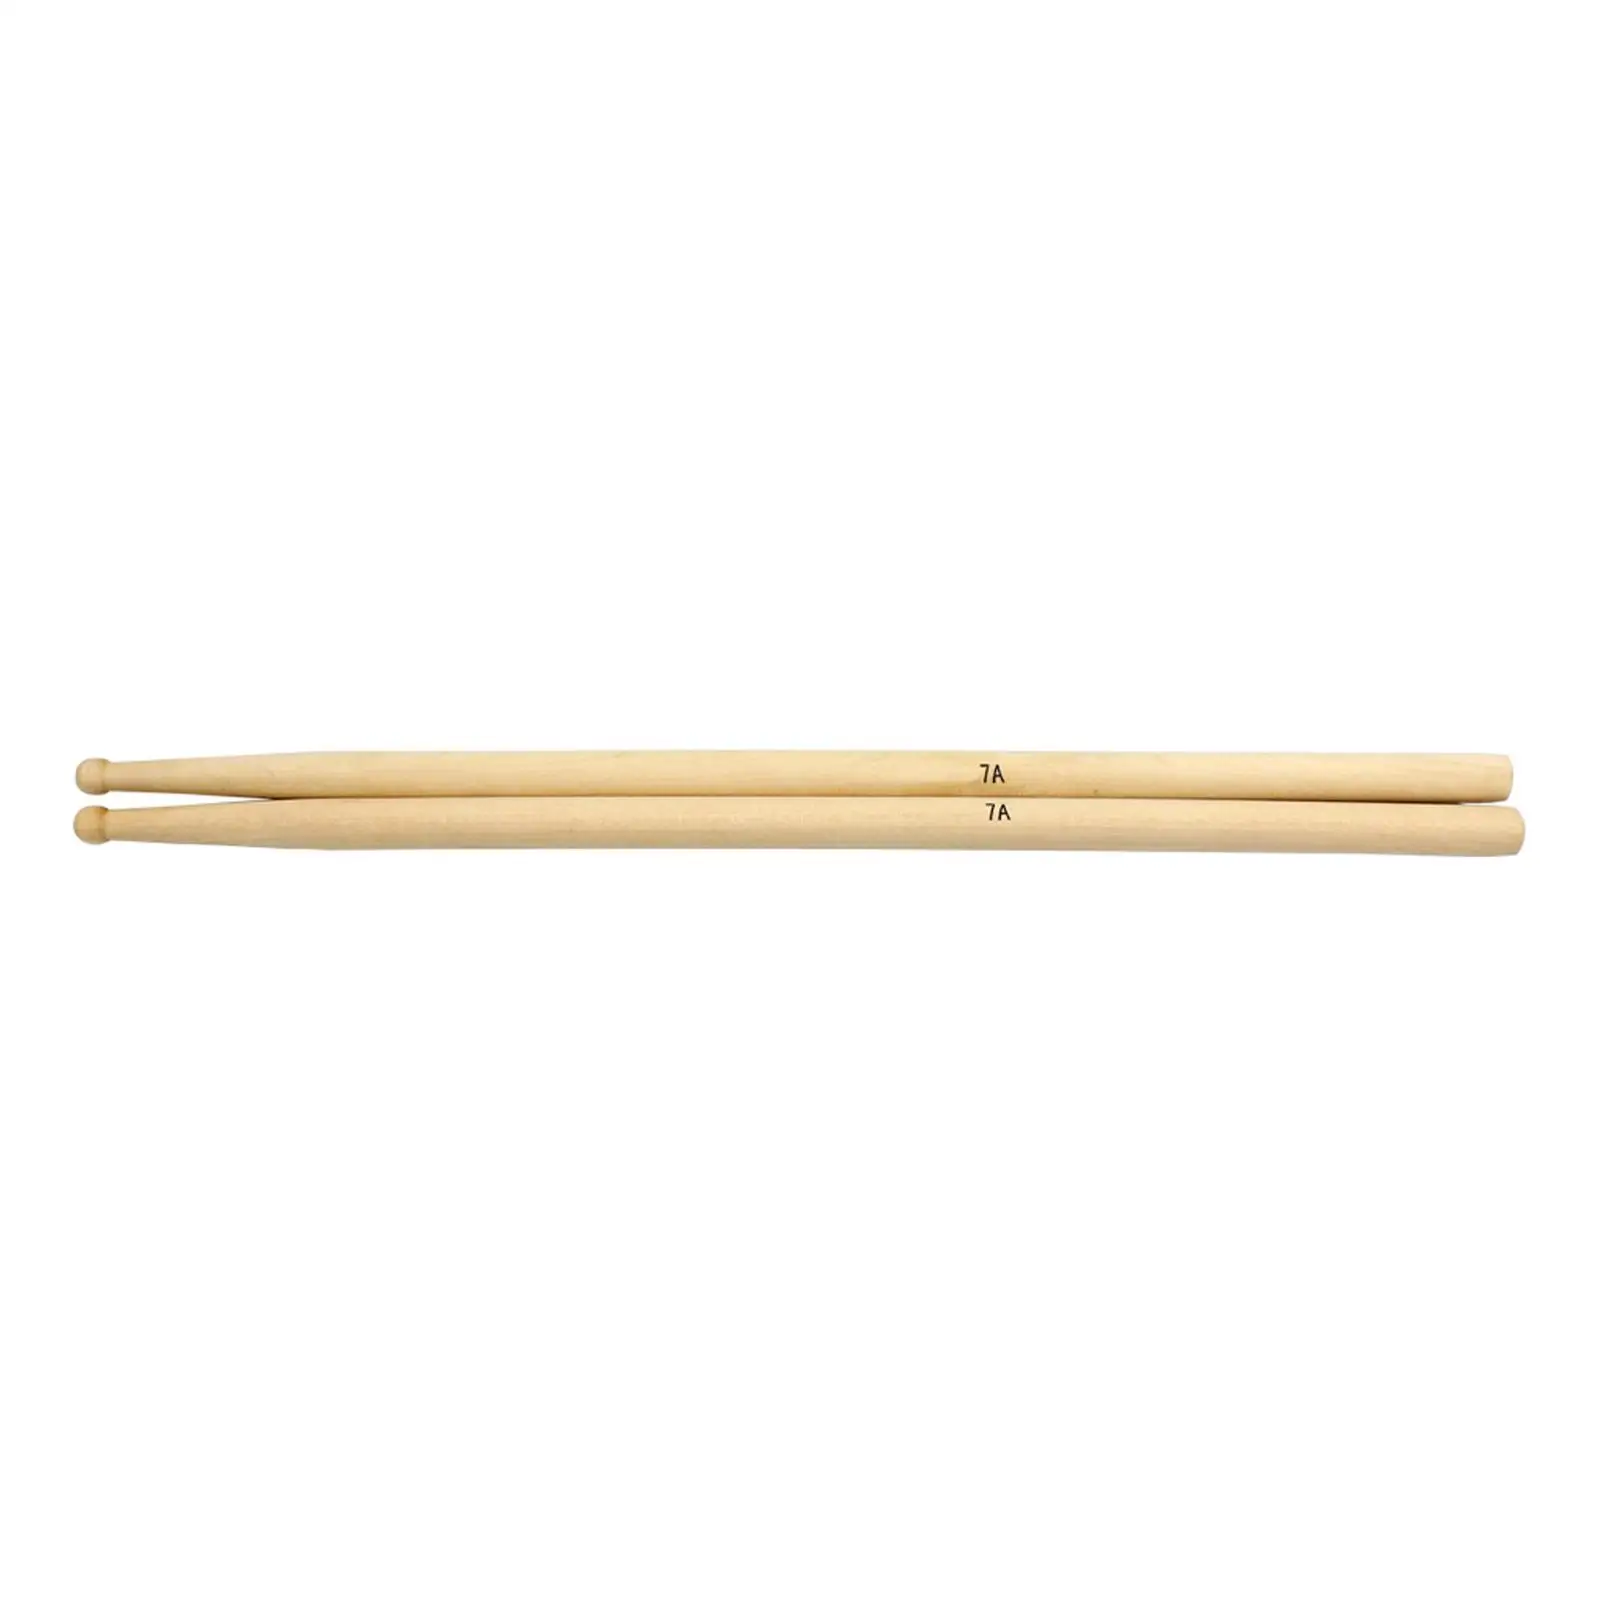 Wooden Drumstick Drum Sticks 7A Drumstick Wood Tip Drumstick for Beginners Professionals